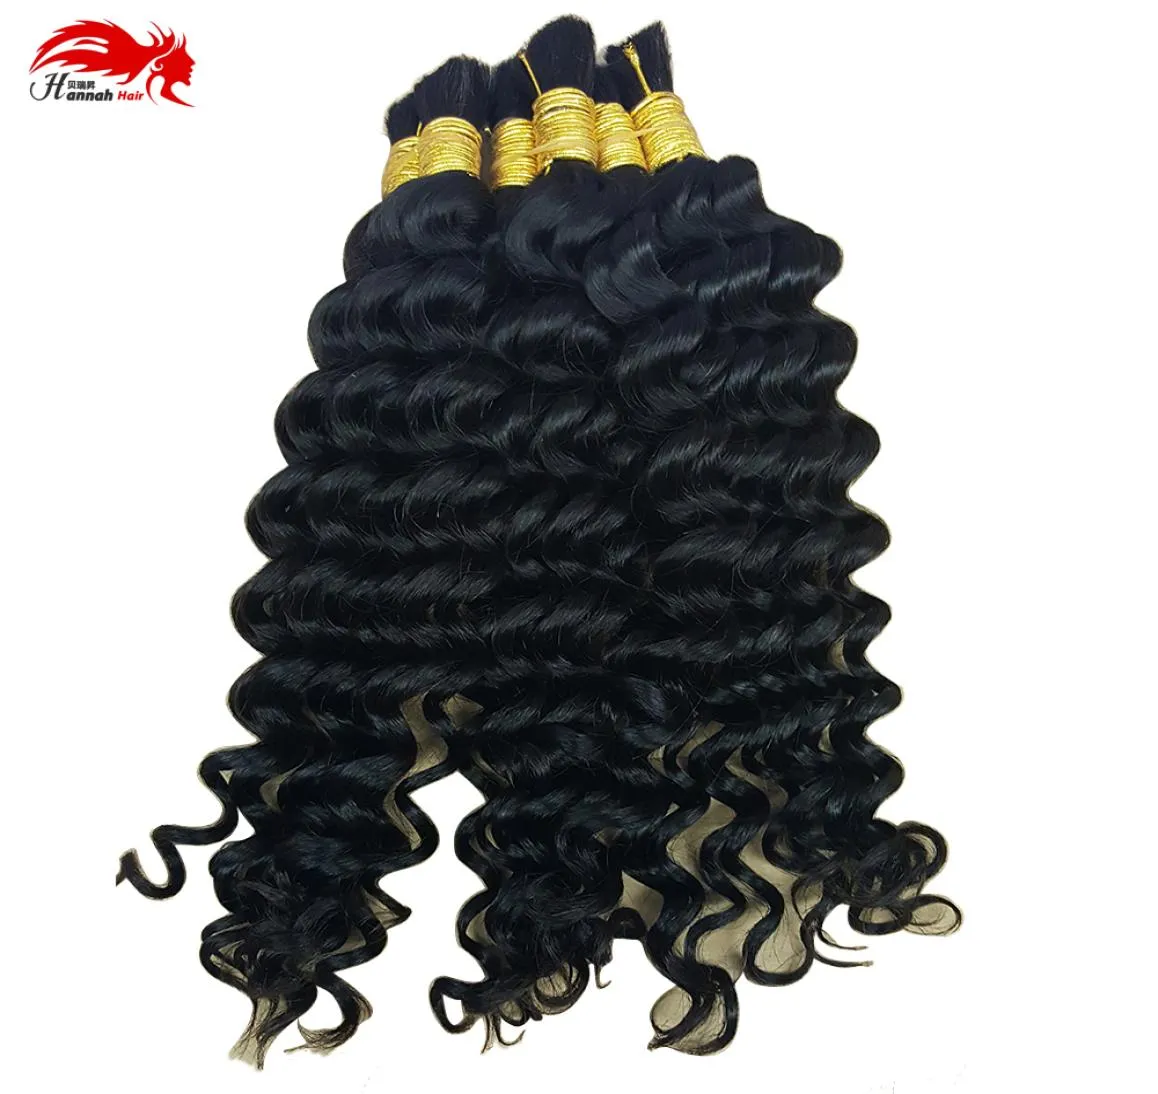 Hannah product Whole Human Hair Bulk In Factory 3 Bundle 150g Brazilian Deep Curly Wave Bulk Hair For Braiding Human Hai5434278